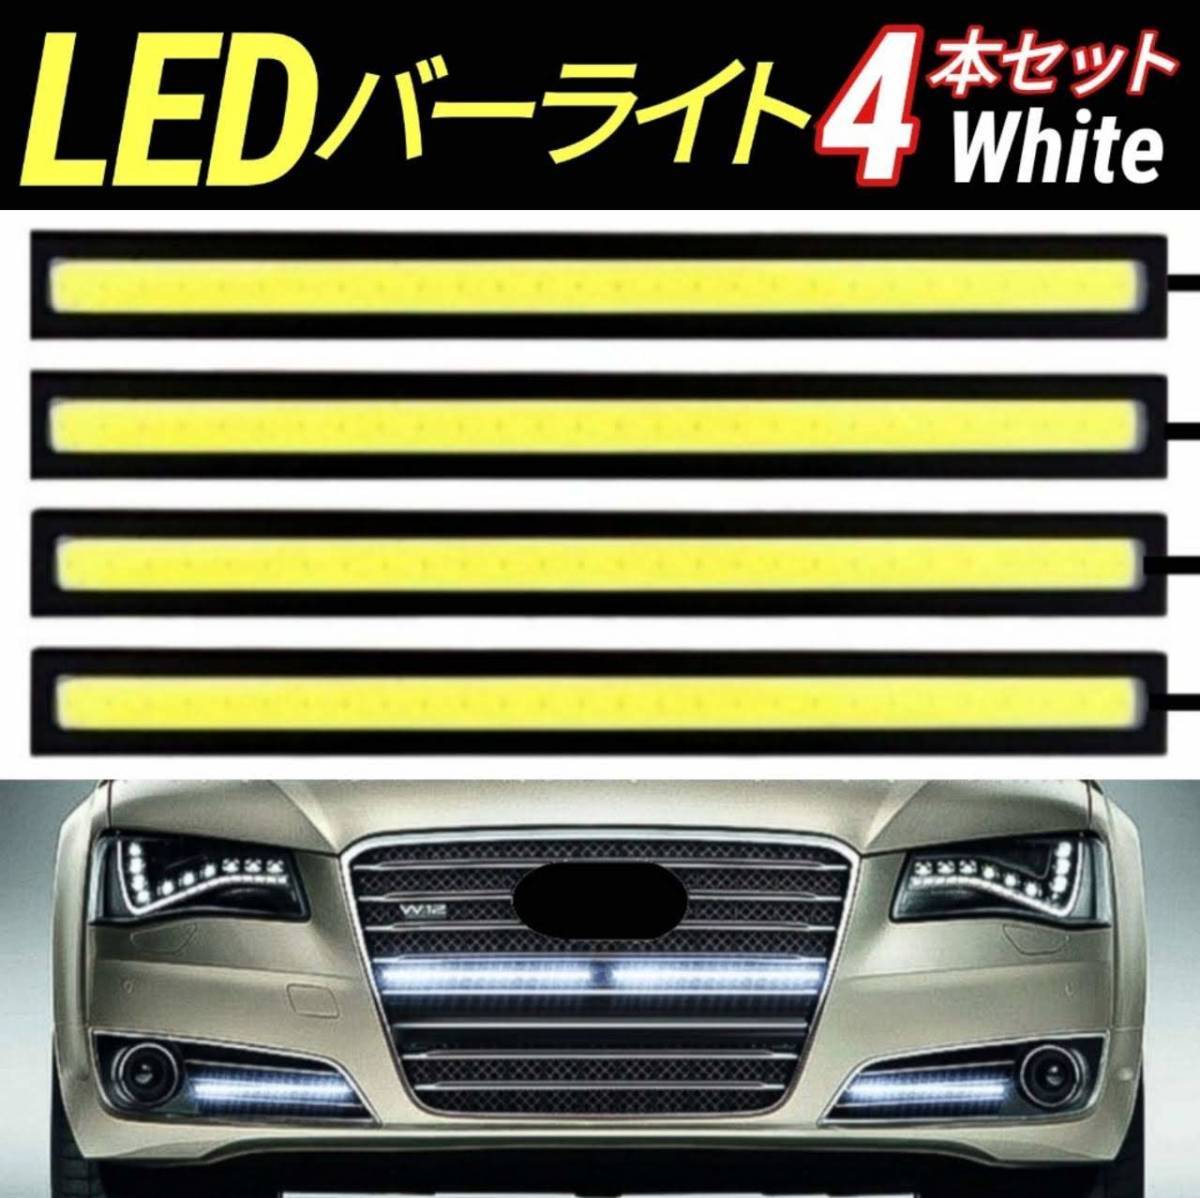 LED デイライト バーライト ホワイト 12V 17cm 10W COB 4本 全面発光 防水 高輝度 白 薄型 イルミ 両面テープ 黒フレーム 車 汎用の画像1